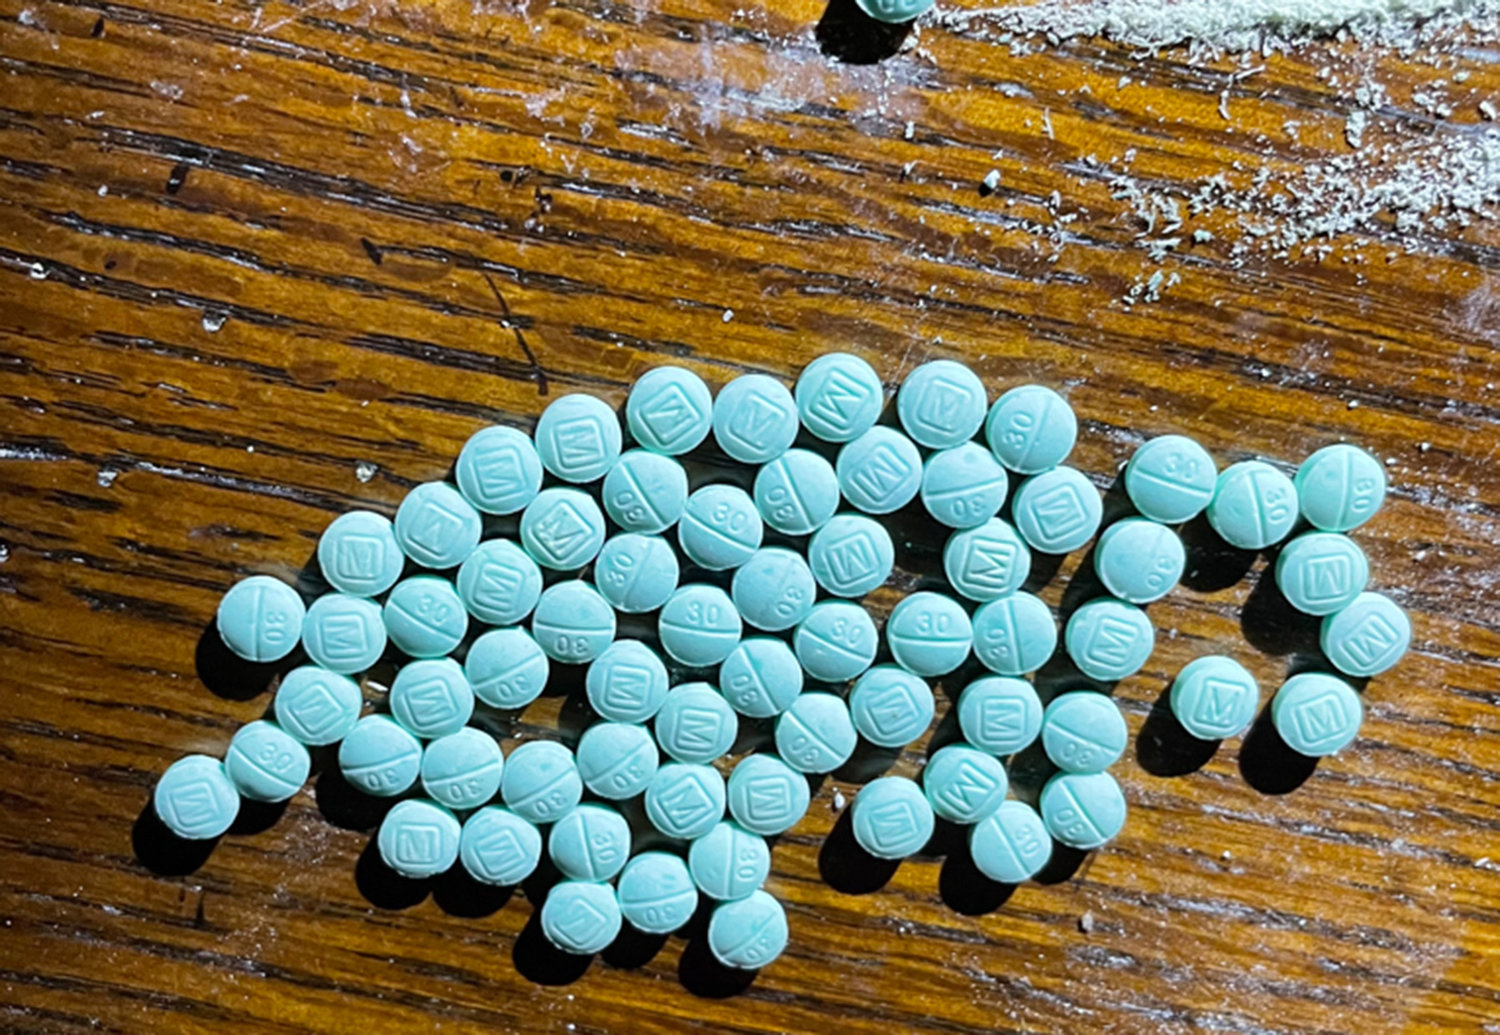 Fentanyl in pill form